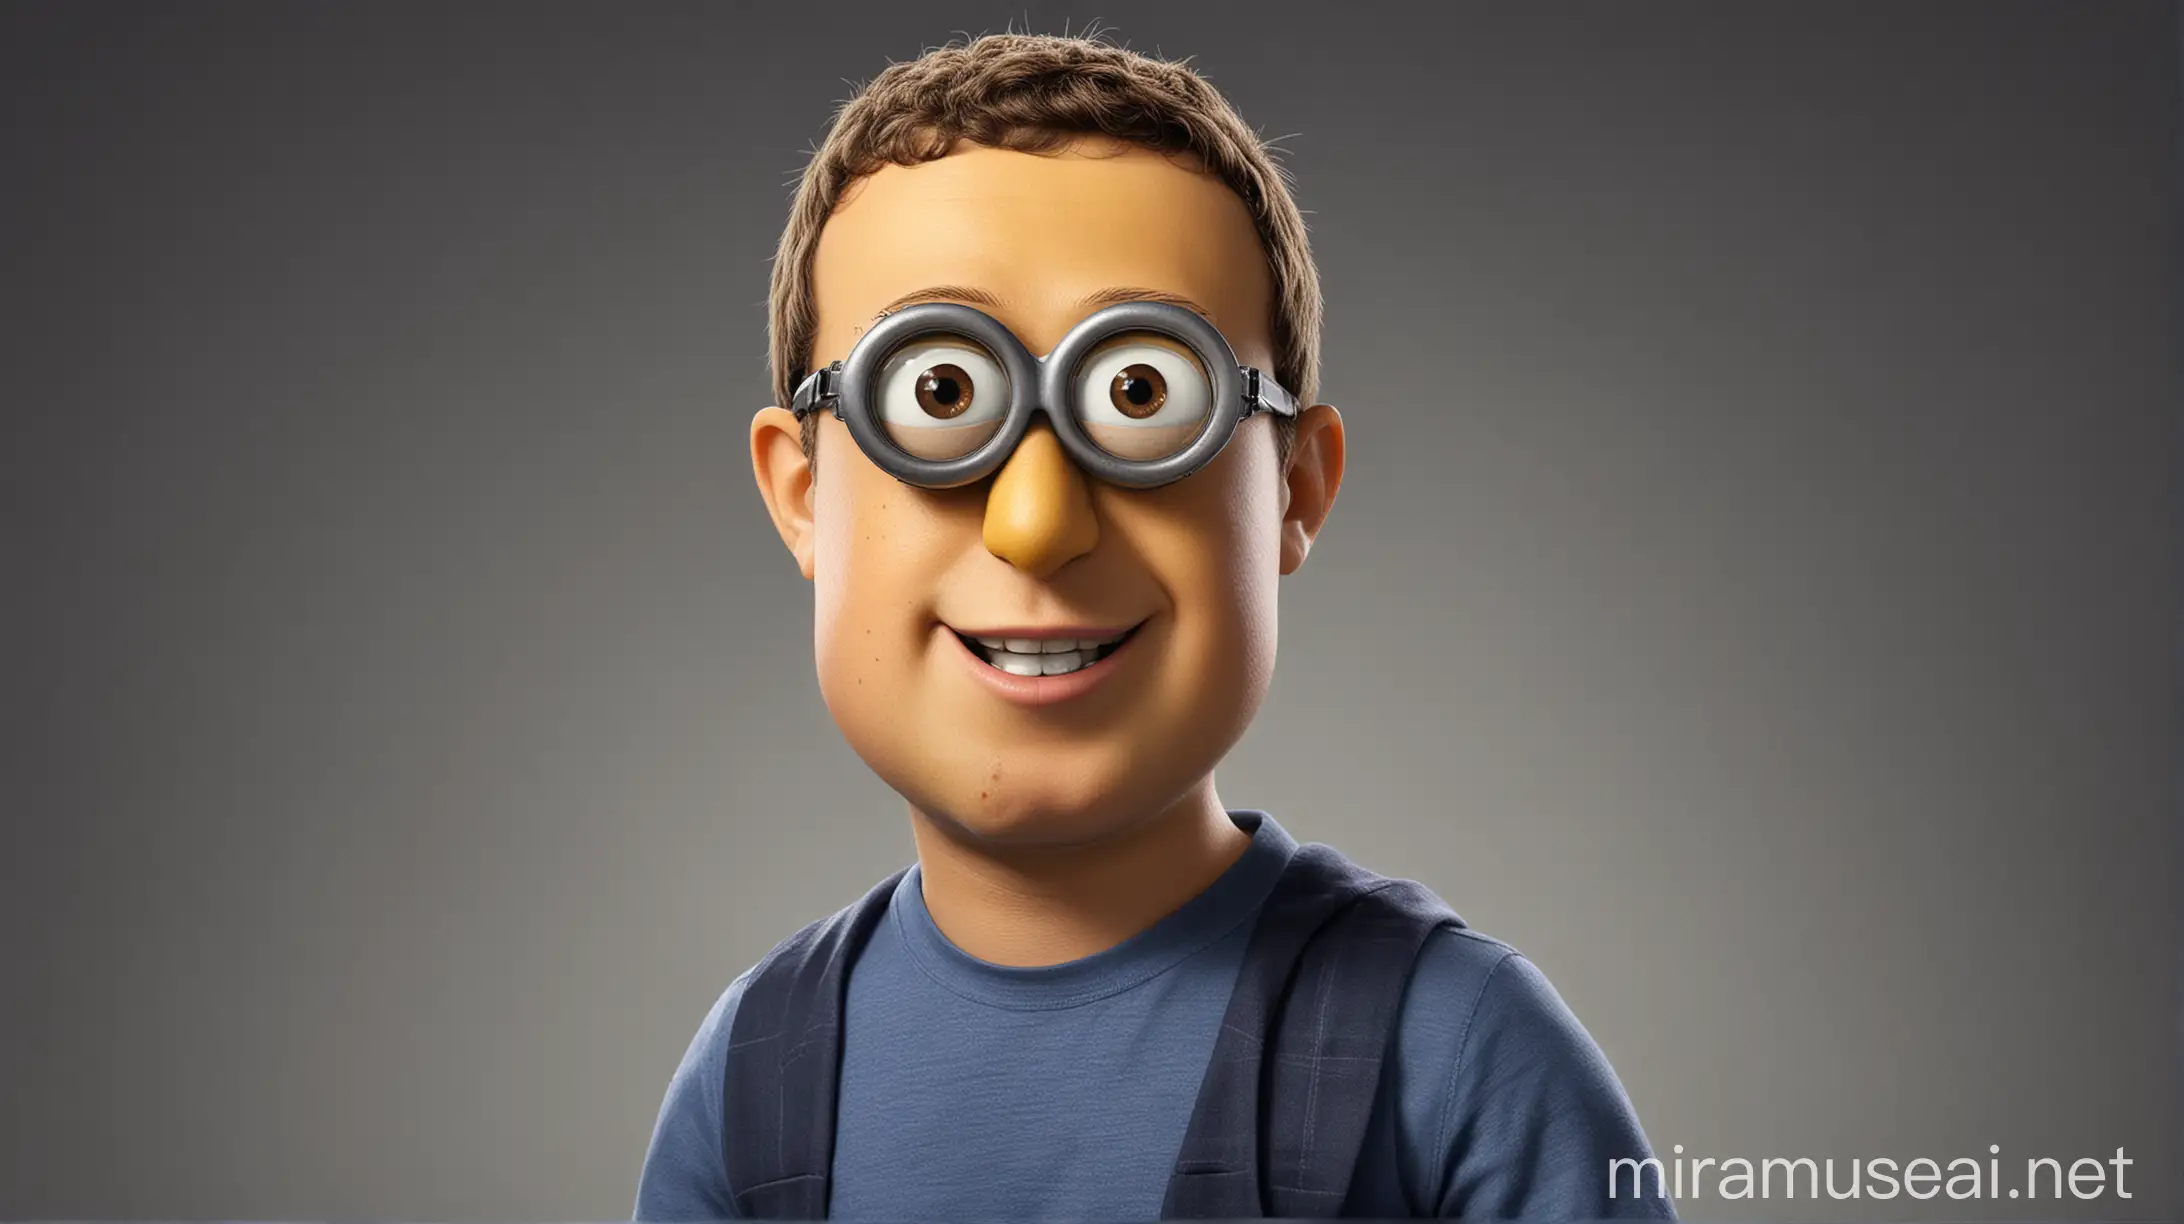 Mark Zuckerberg the American businessman transformes into a Minion.